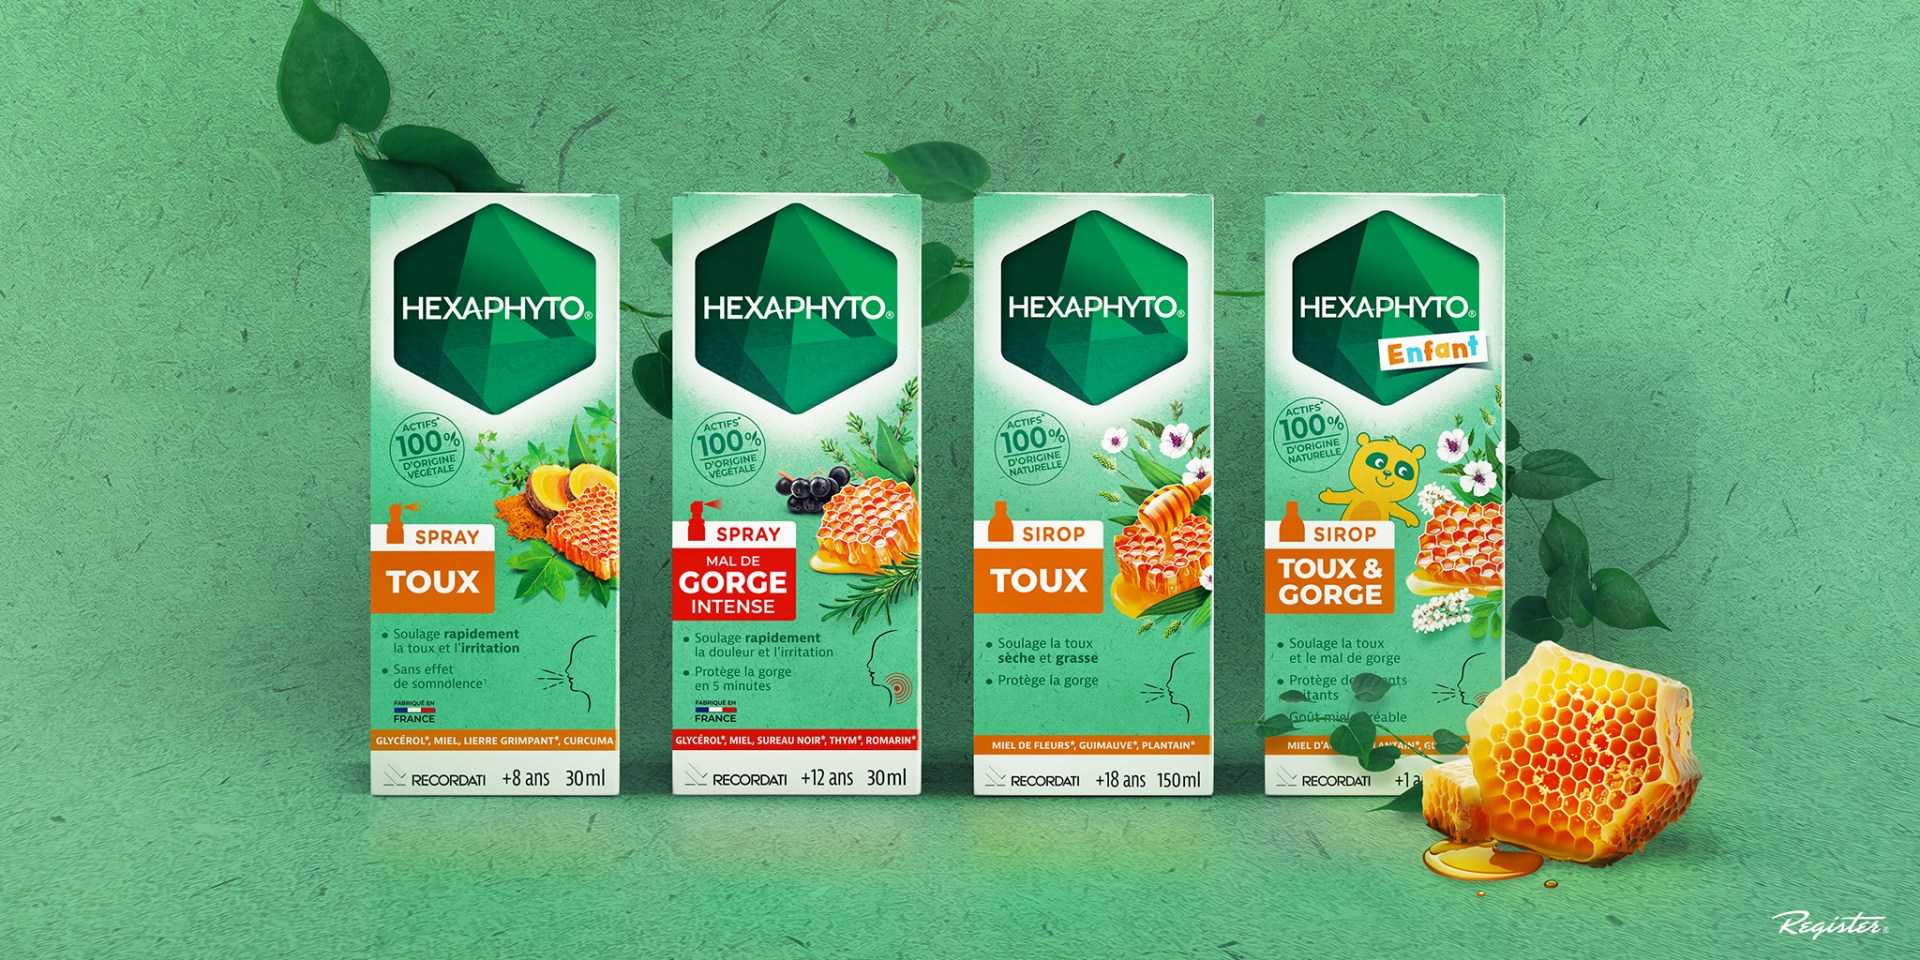 Hexaphyto蜂蜜止咳糖浆包装设计，以自然绿色方式表达药效